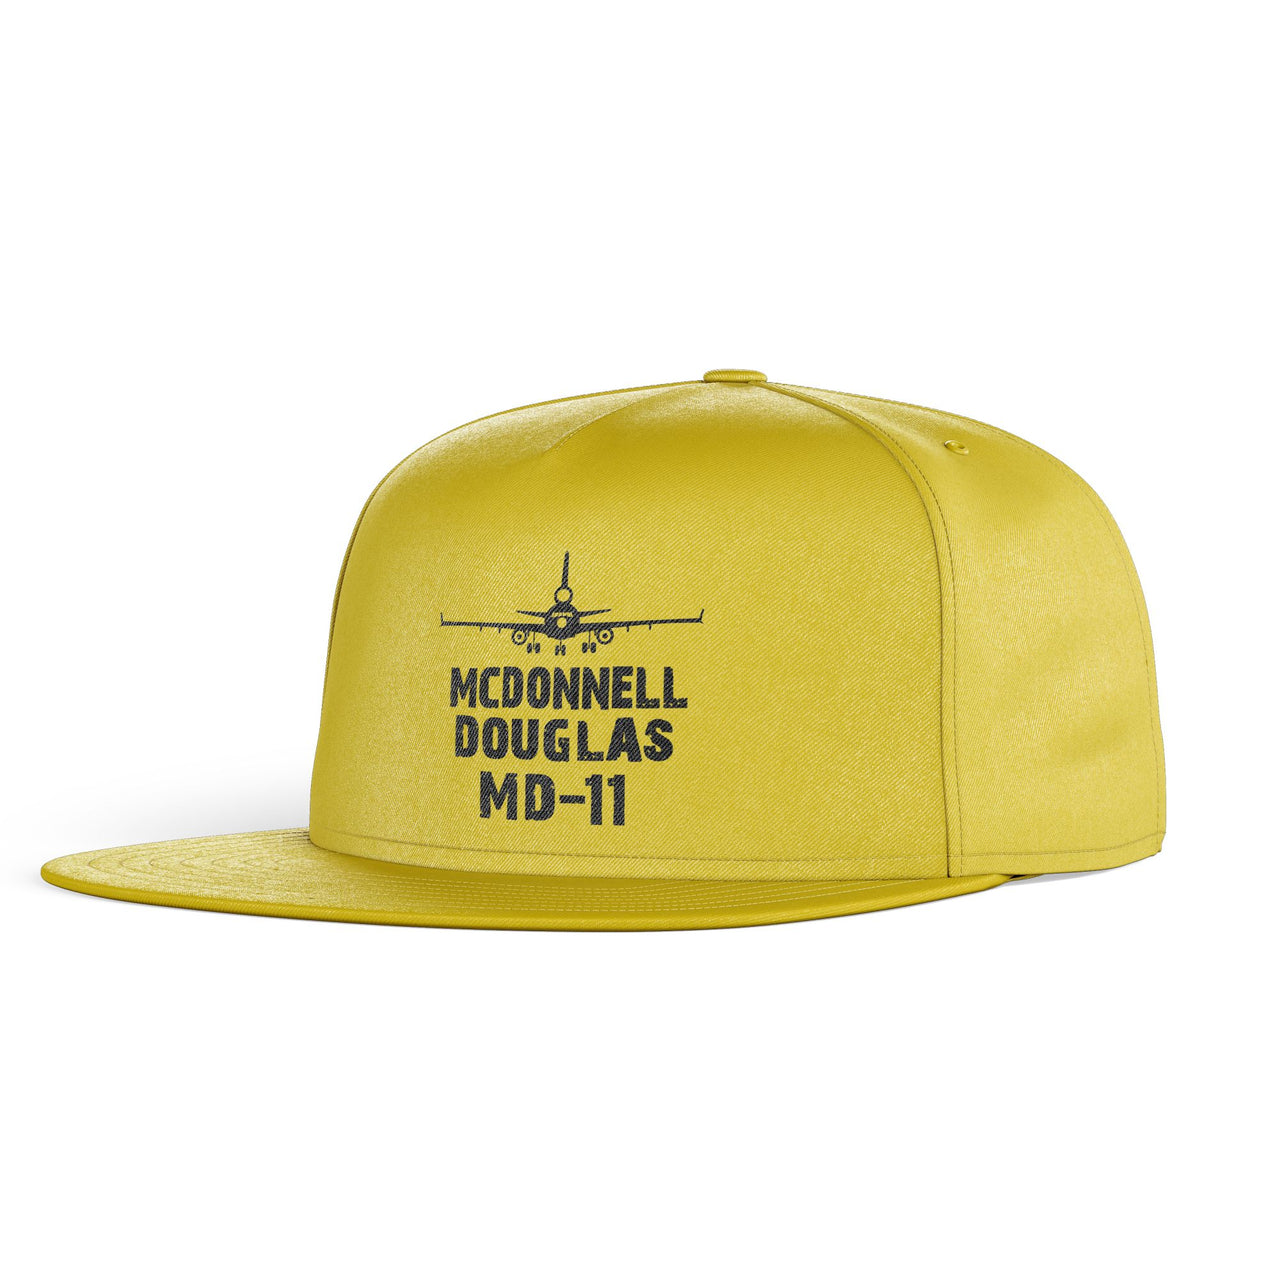 McDonnell Douglas MD-11 & Plane Designed Snapback Caps & Hats